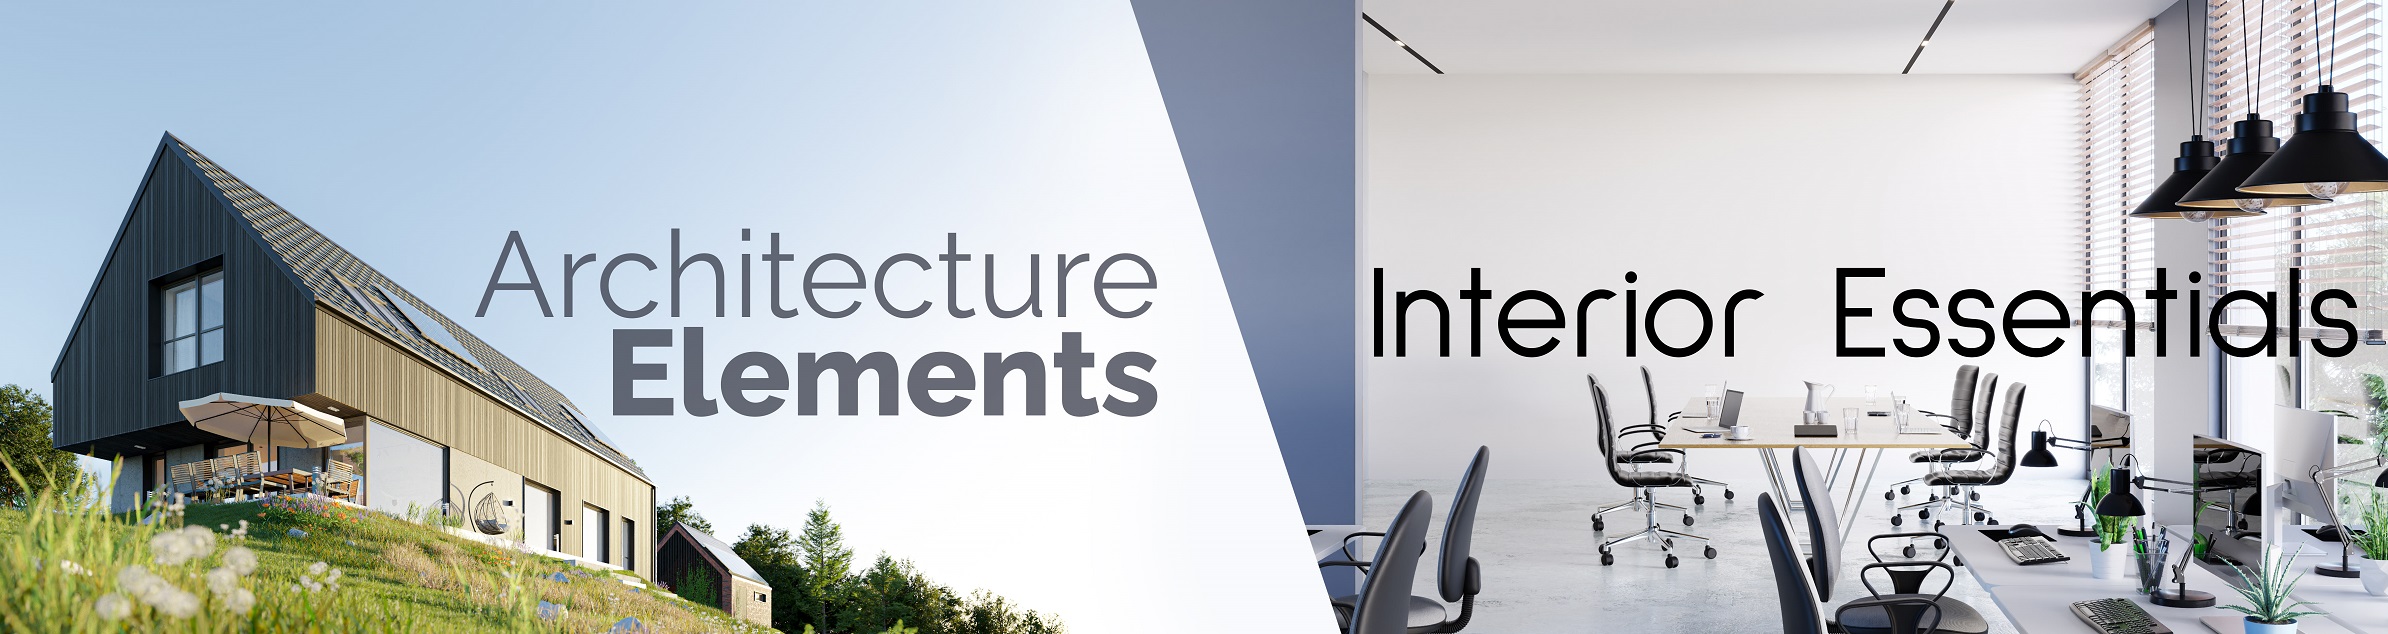 Architecture Elements Interior Essentials